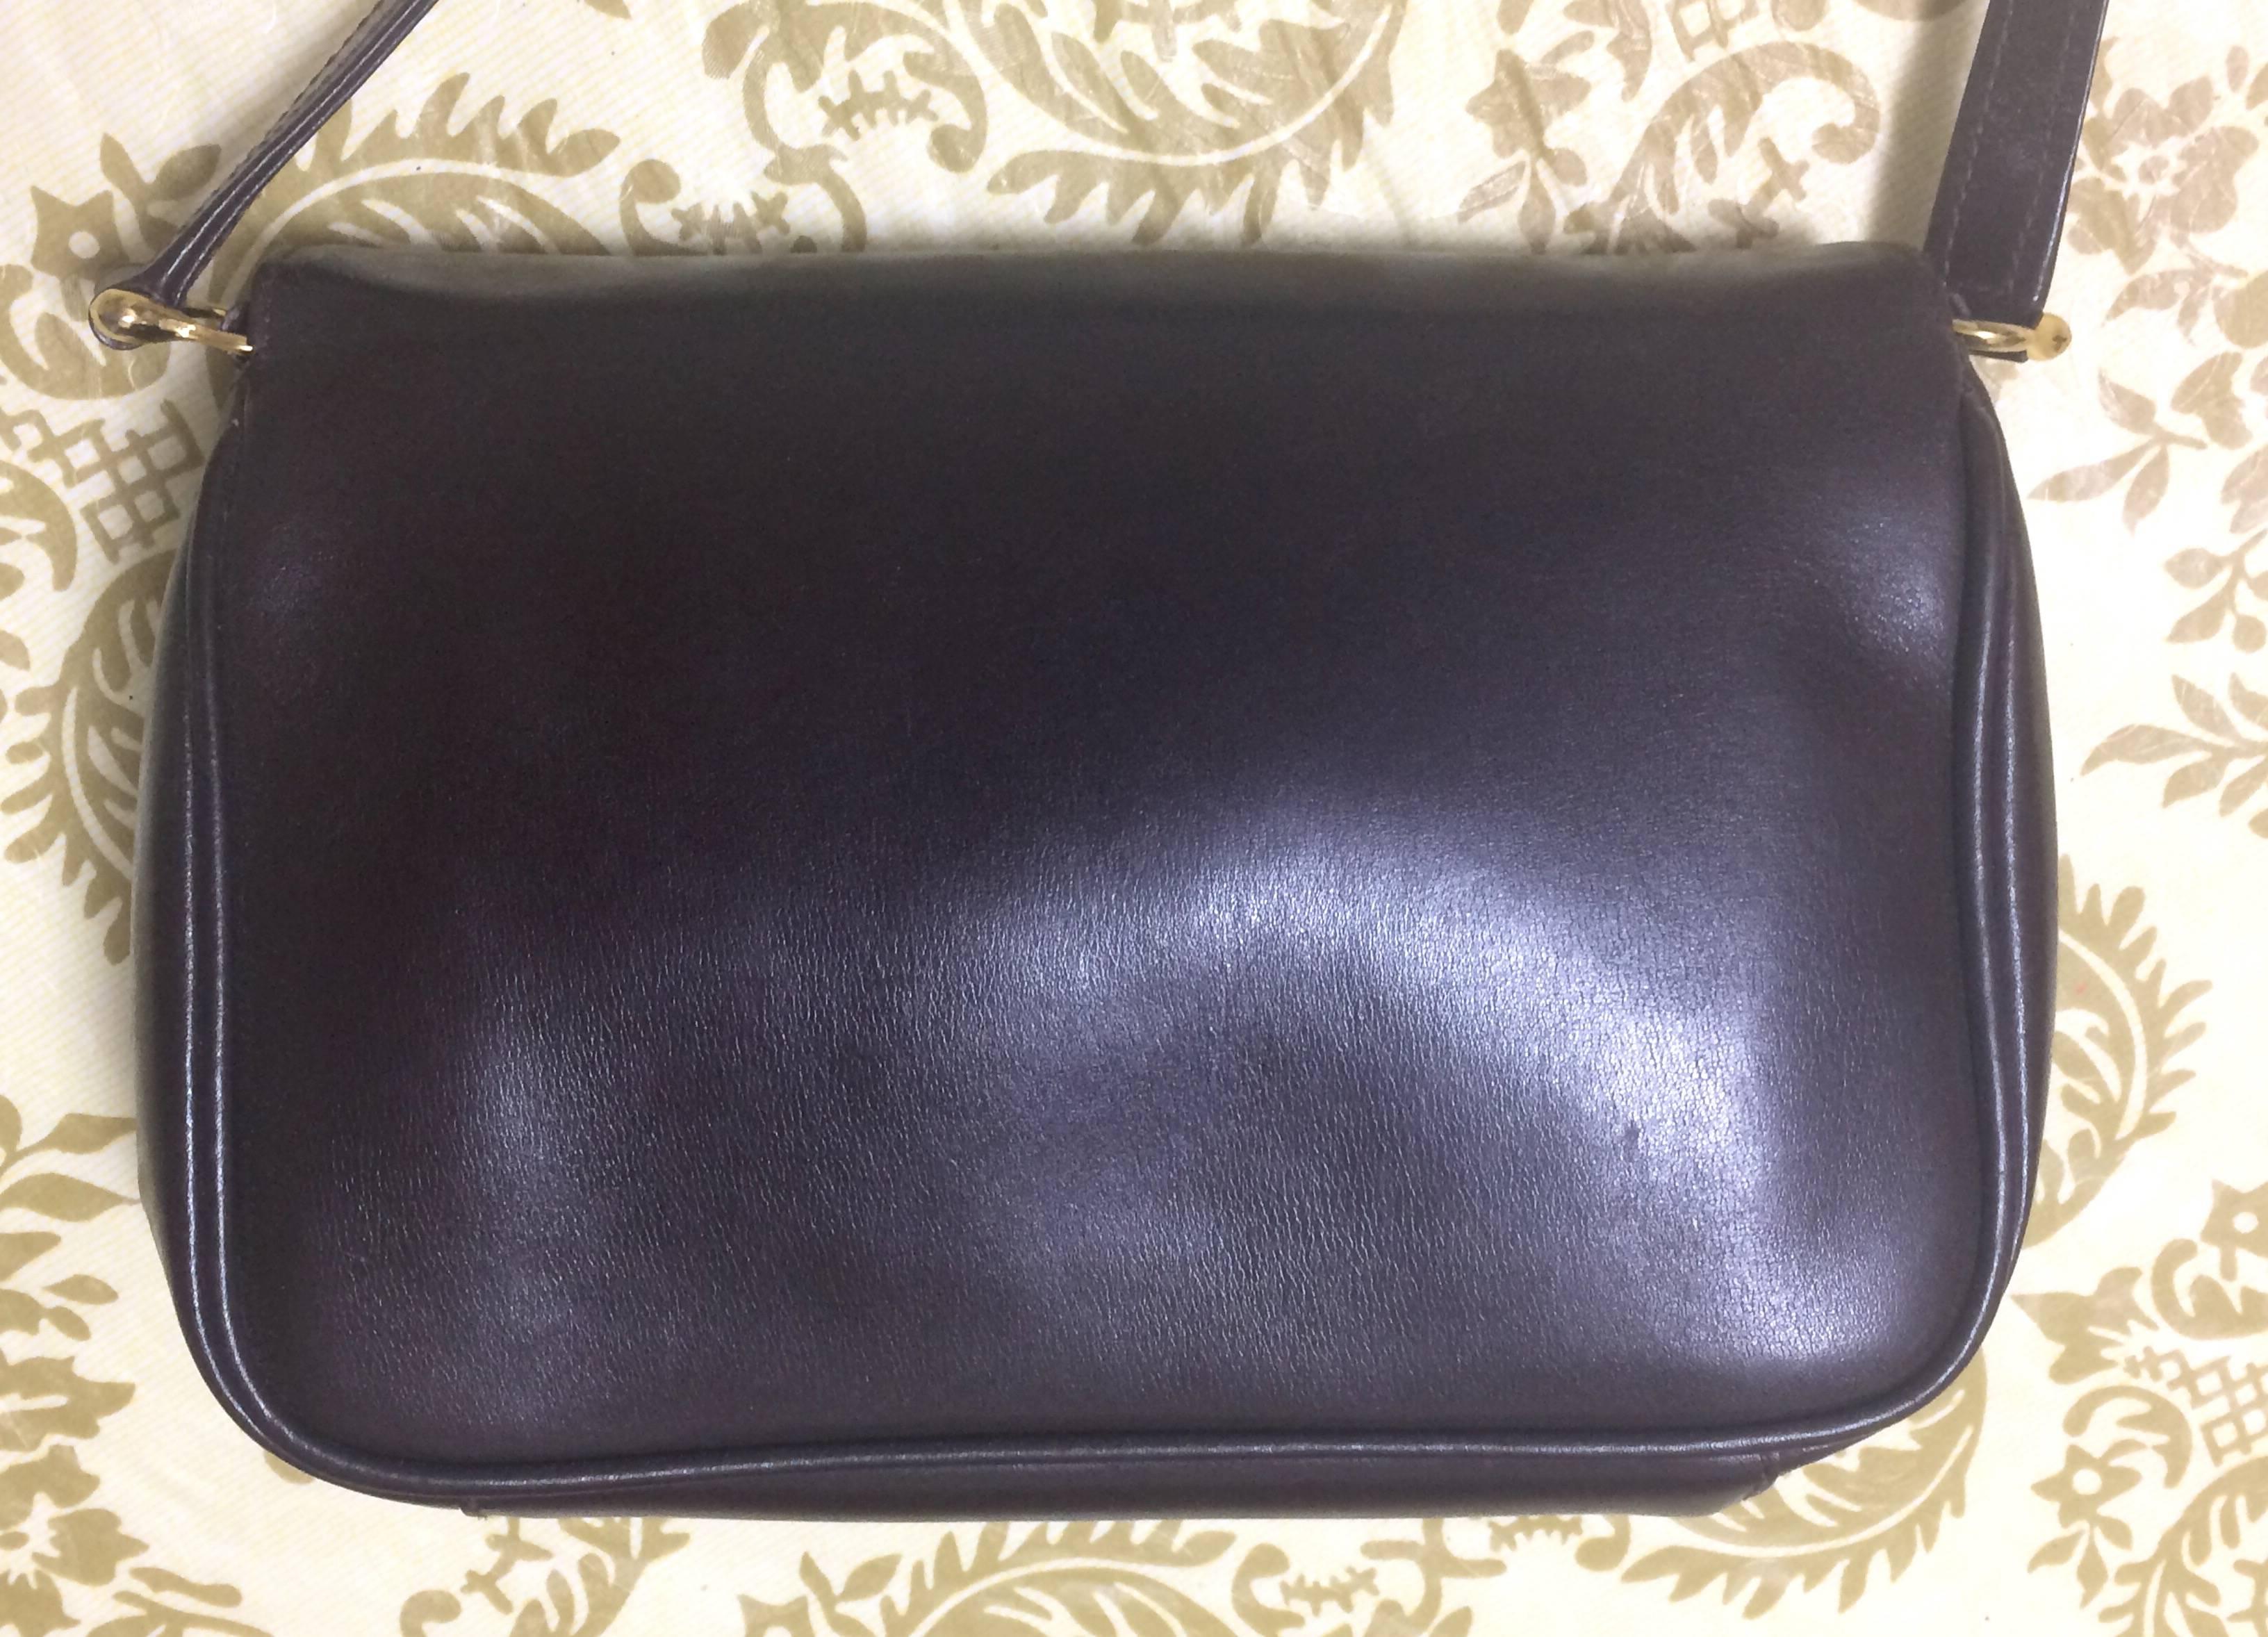 Black Vintage Gucci dark brown leather classic shoulder bag with 2 horsebit motifs.